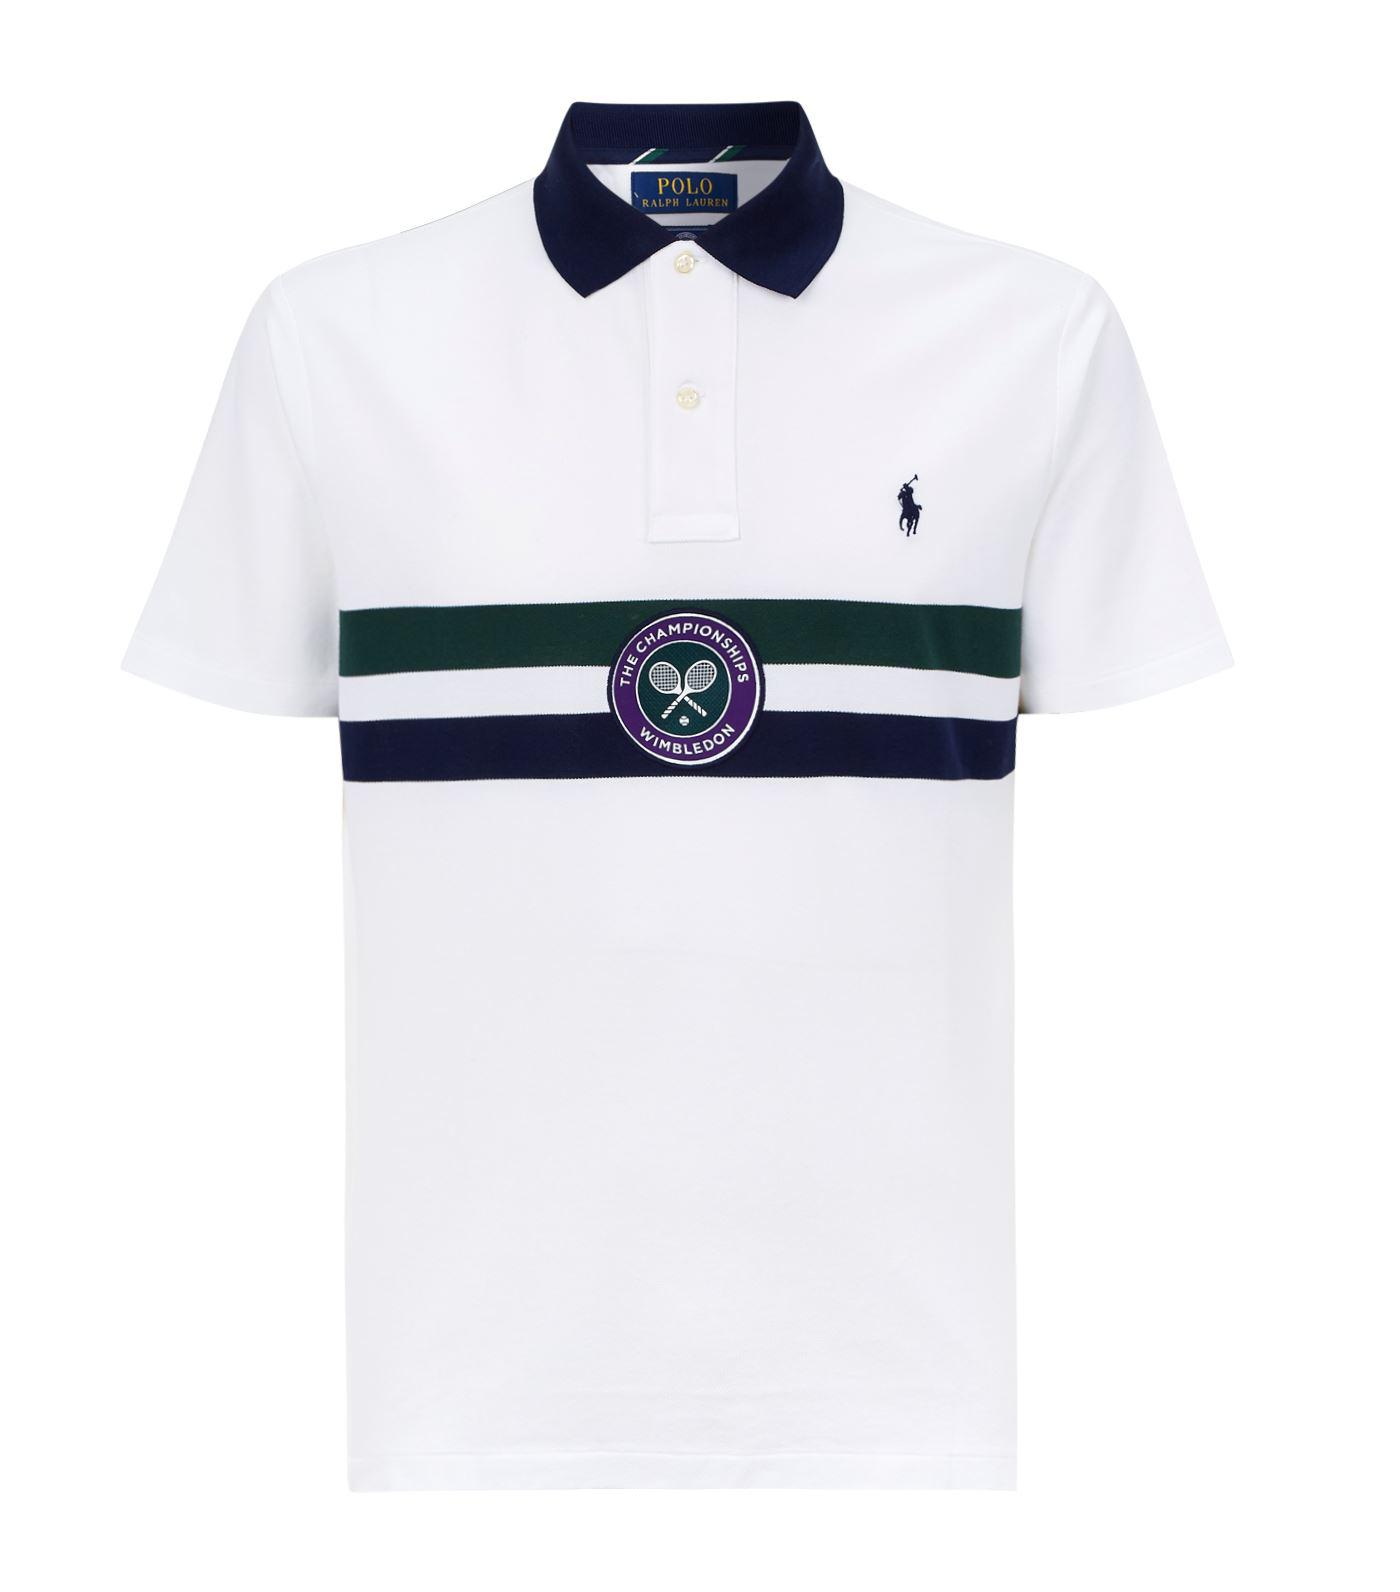 Polo Ralph Lauren Cotton Wimbledon Polo Shirt in White for Men - Lyst